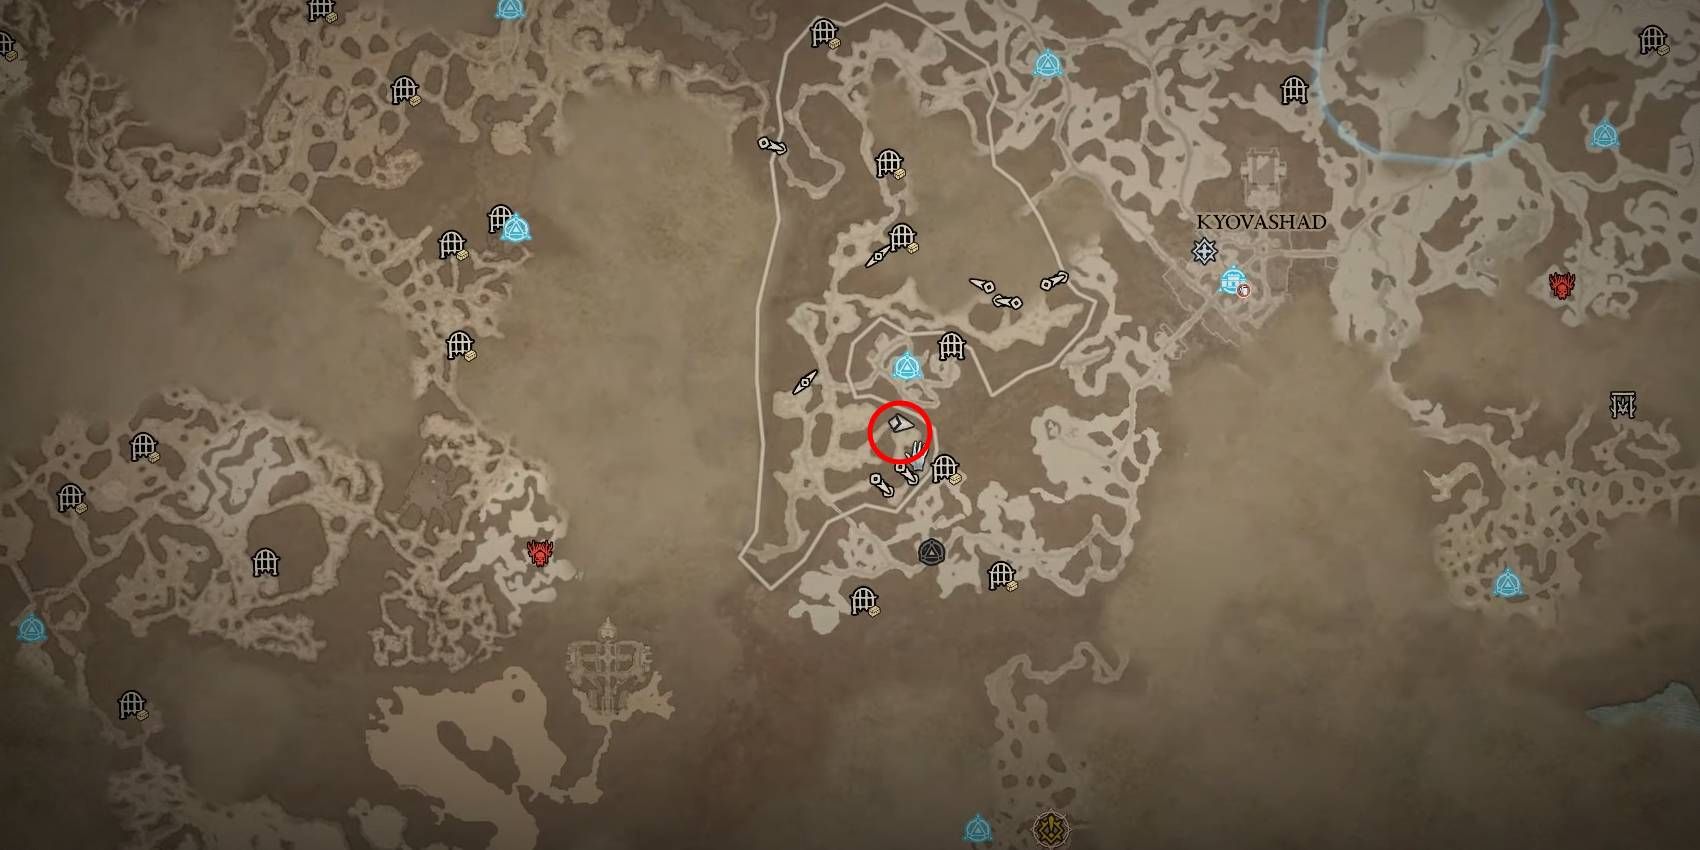 Diablo 4 Wrathful Osgar Reede Rare Elite Enemy Location Marked in Red Circle on Map